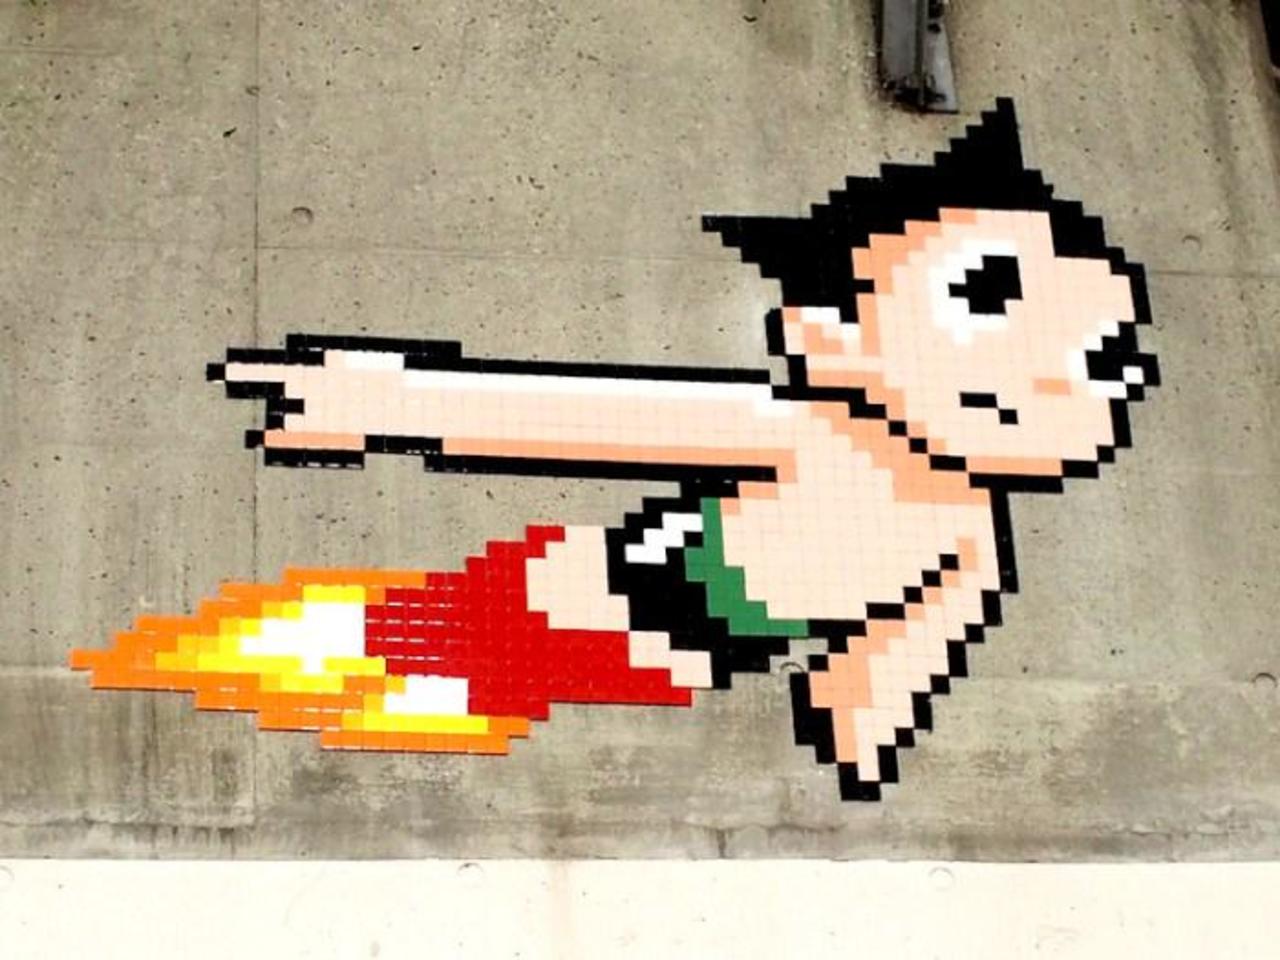 #StreetArt Check out Tokyo’s pretty cool 8bit  #graffiti #art http://t.co/s5QVsRoaAI” http://ow.ly/MBQQx